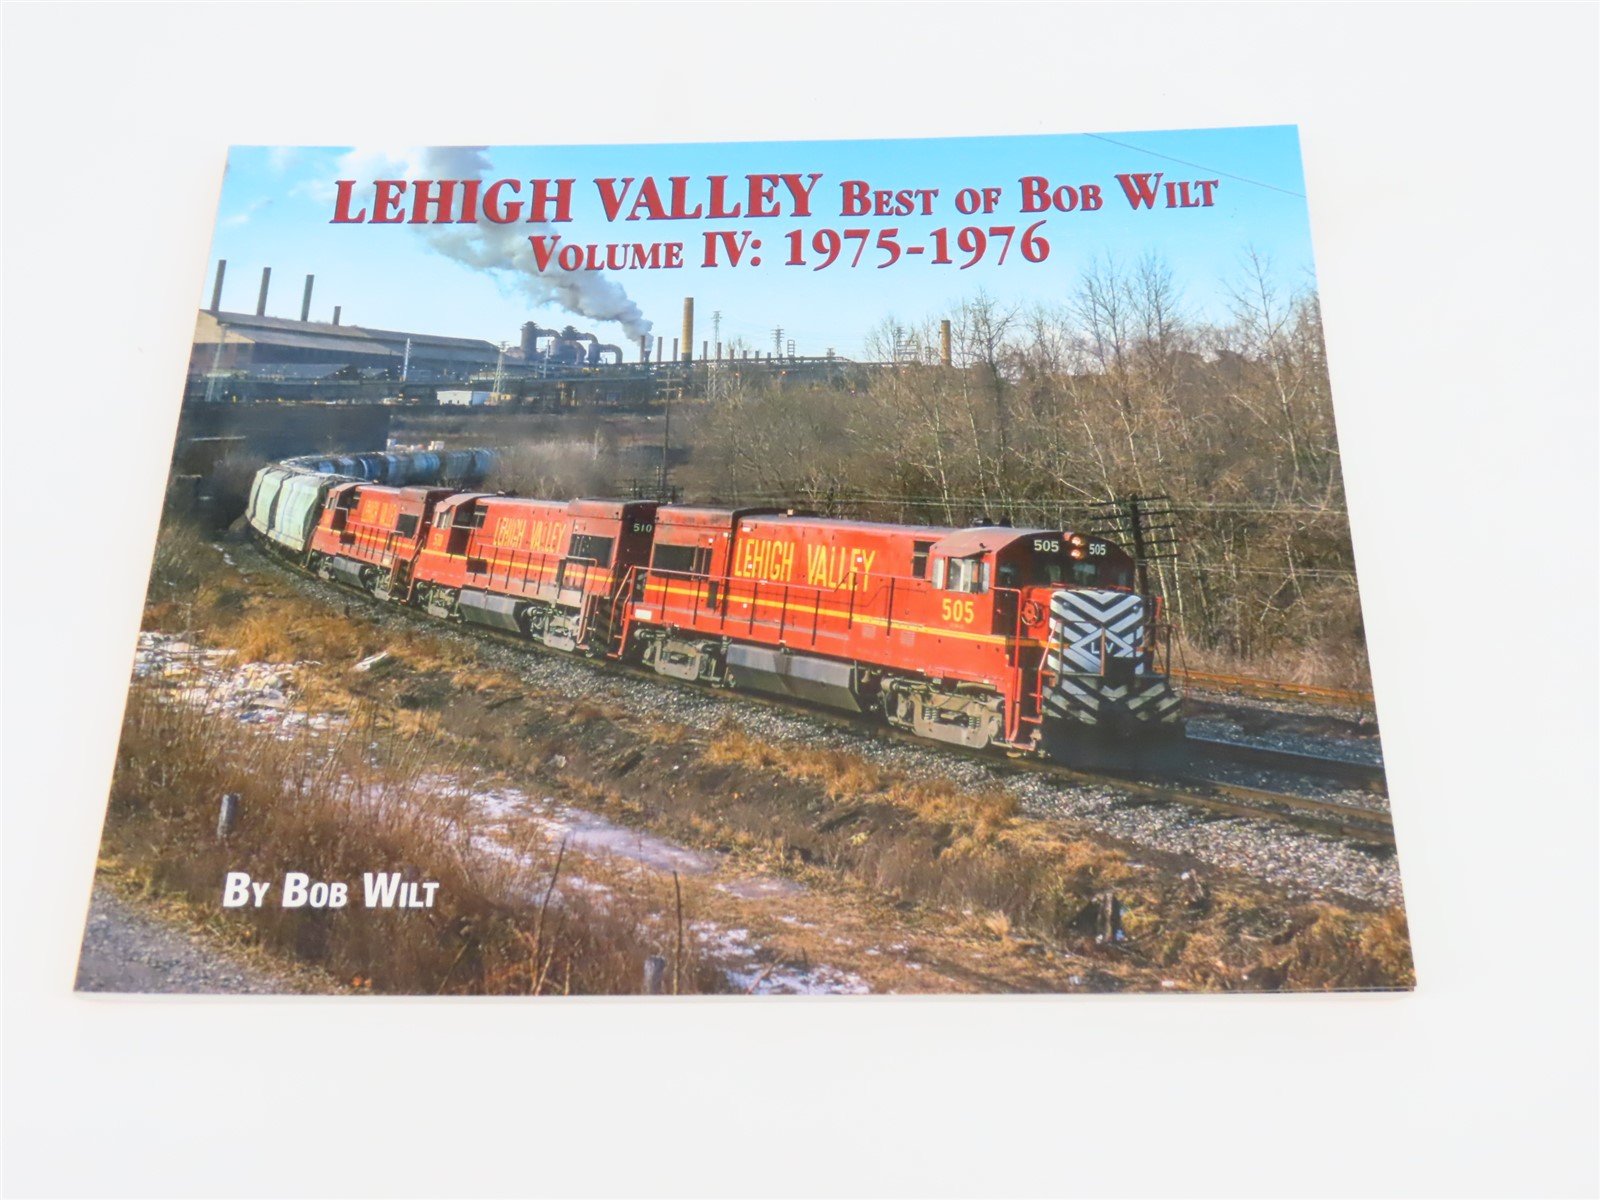 Morning Sun: Lehigh Valley Volume IV: 1975-1976 by Bob Wilt ©2018 SC Book